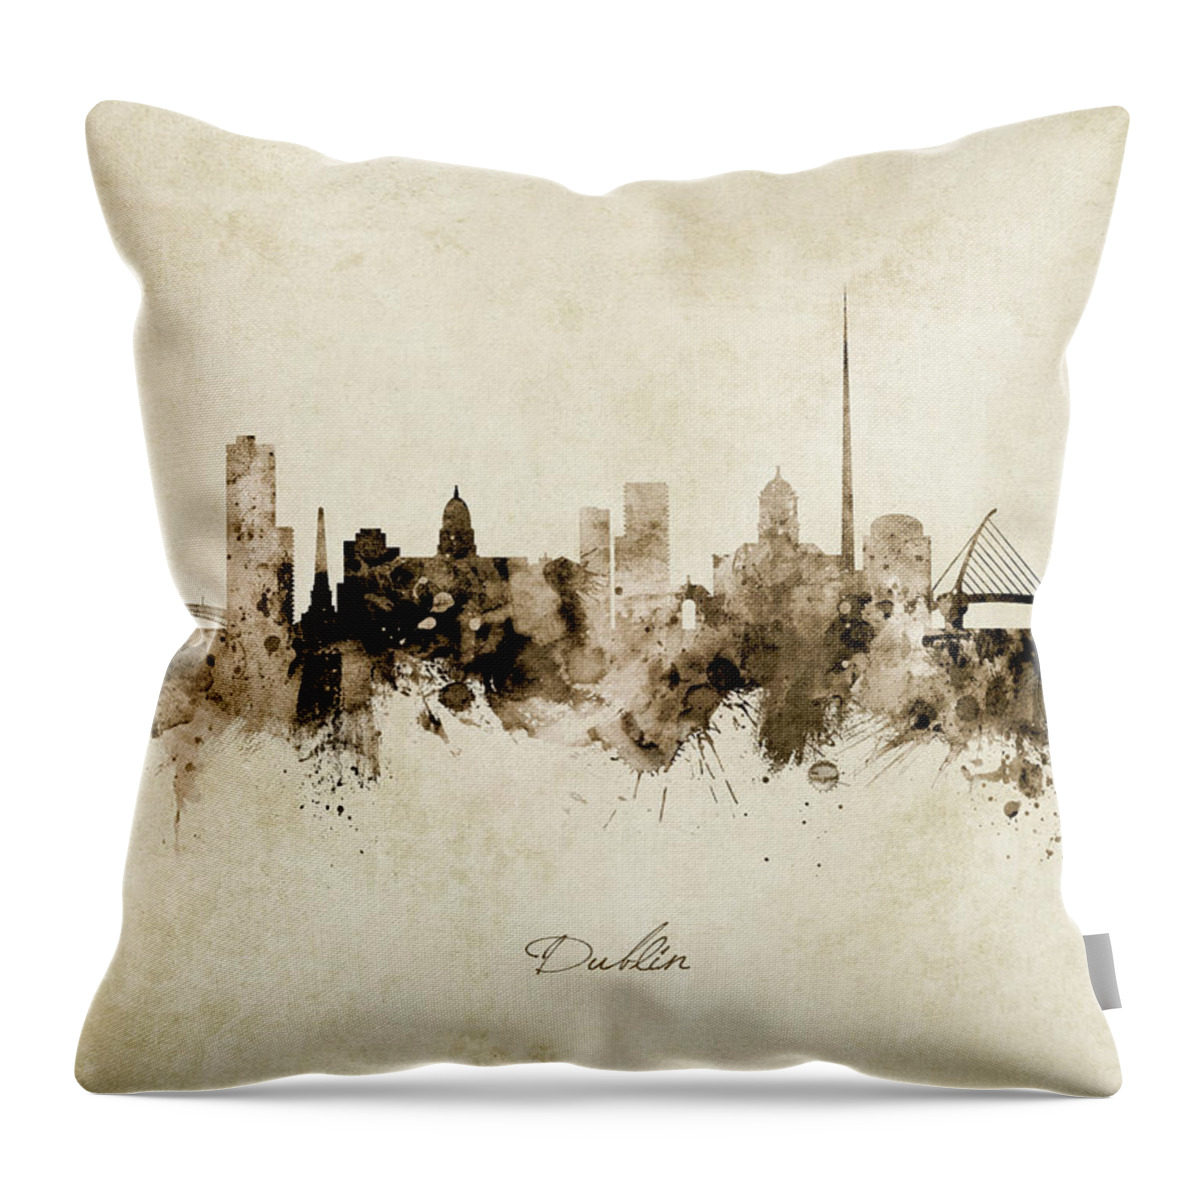 Dublin Throw Pillow featuring the digital art Dublin Ireland Skyline #22 by Michael Tompsett